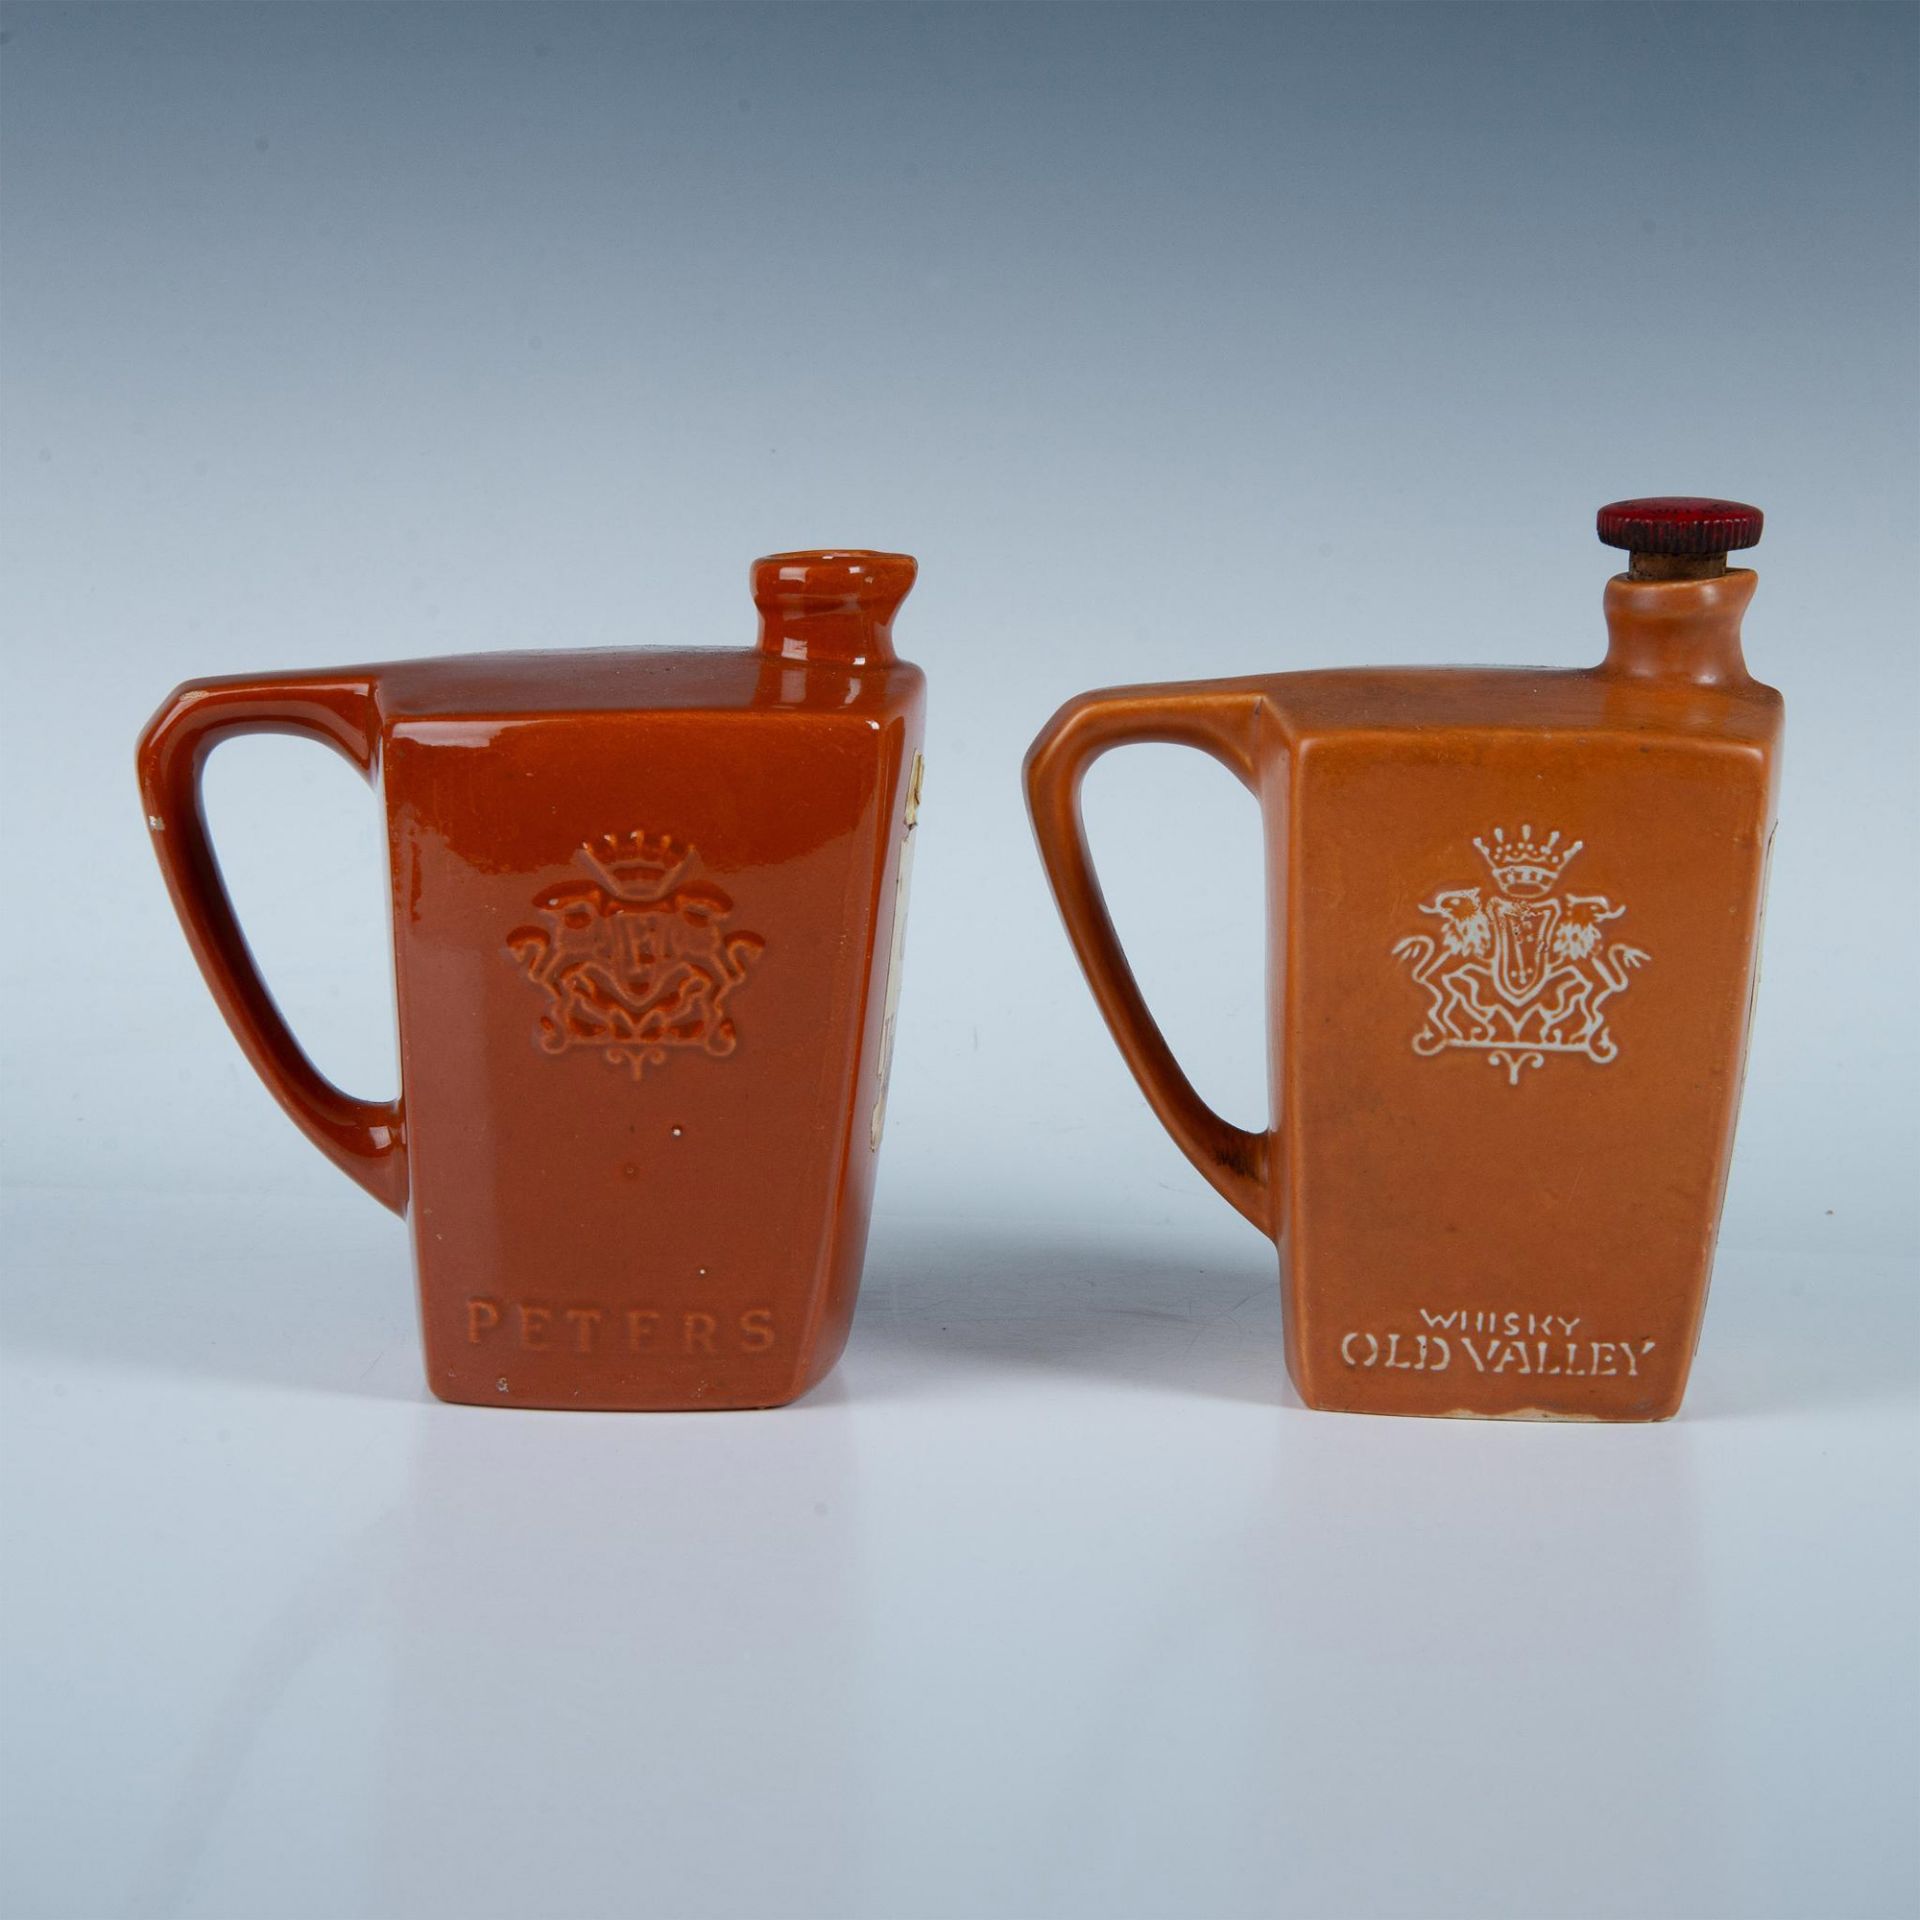 2pc Vintage Ceramic Peter's Old Valley Whisky Bottles - Bild 4 aus 6